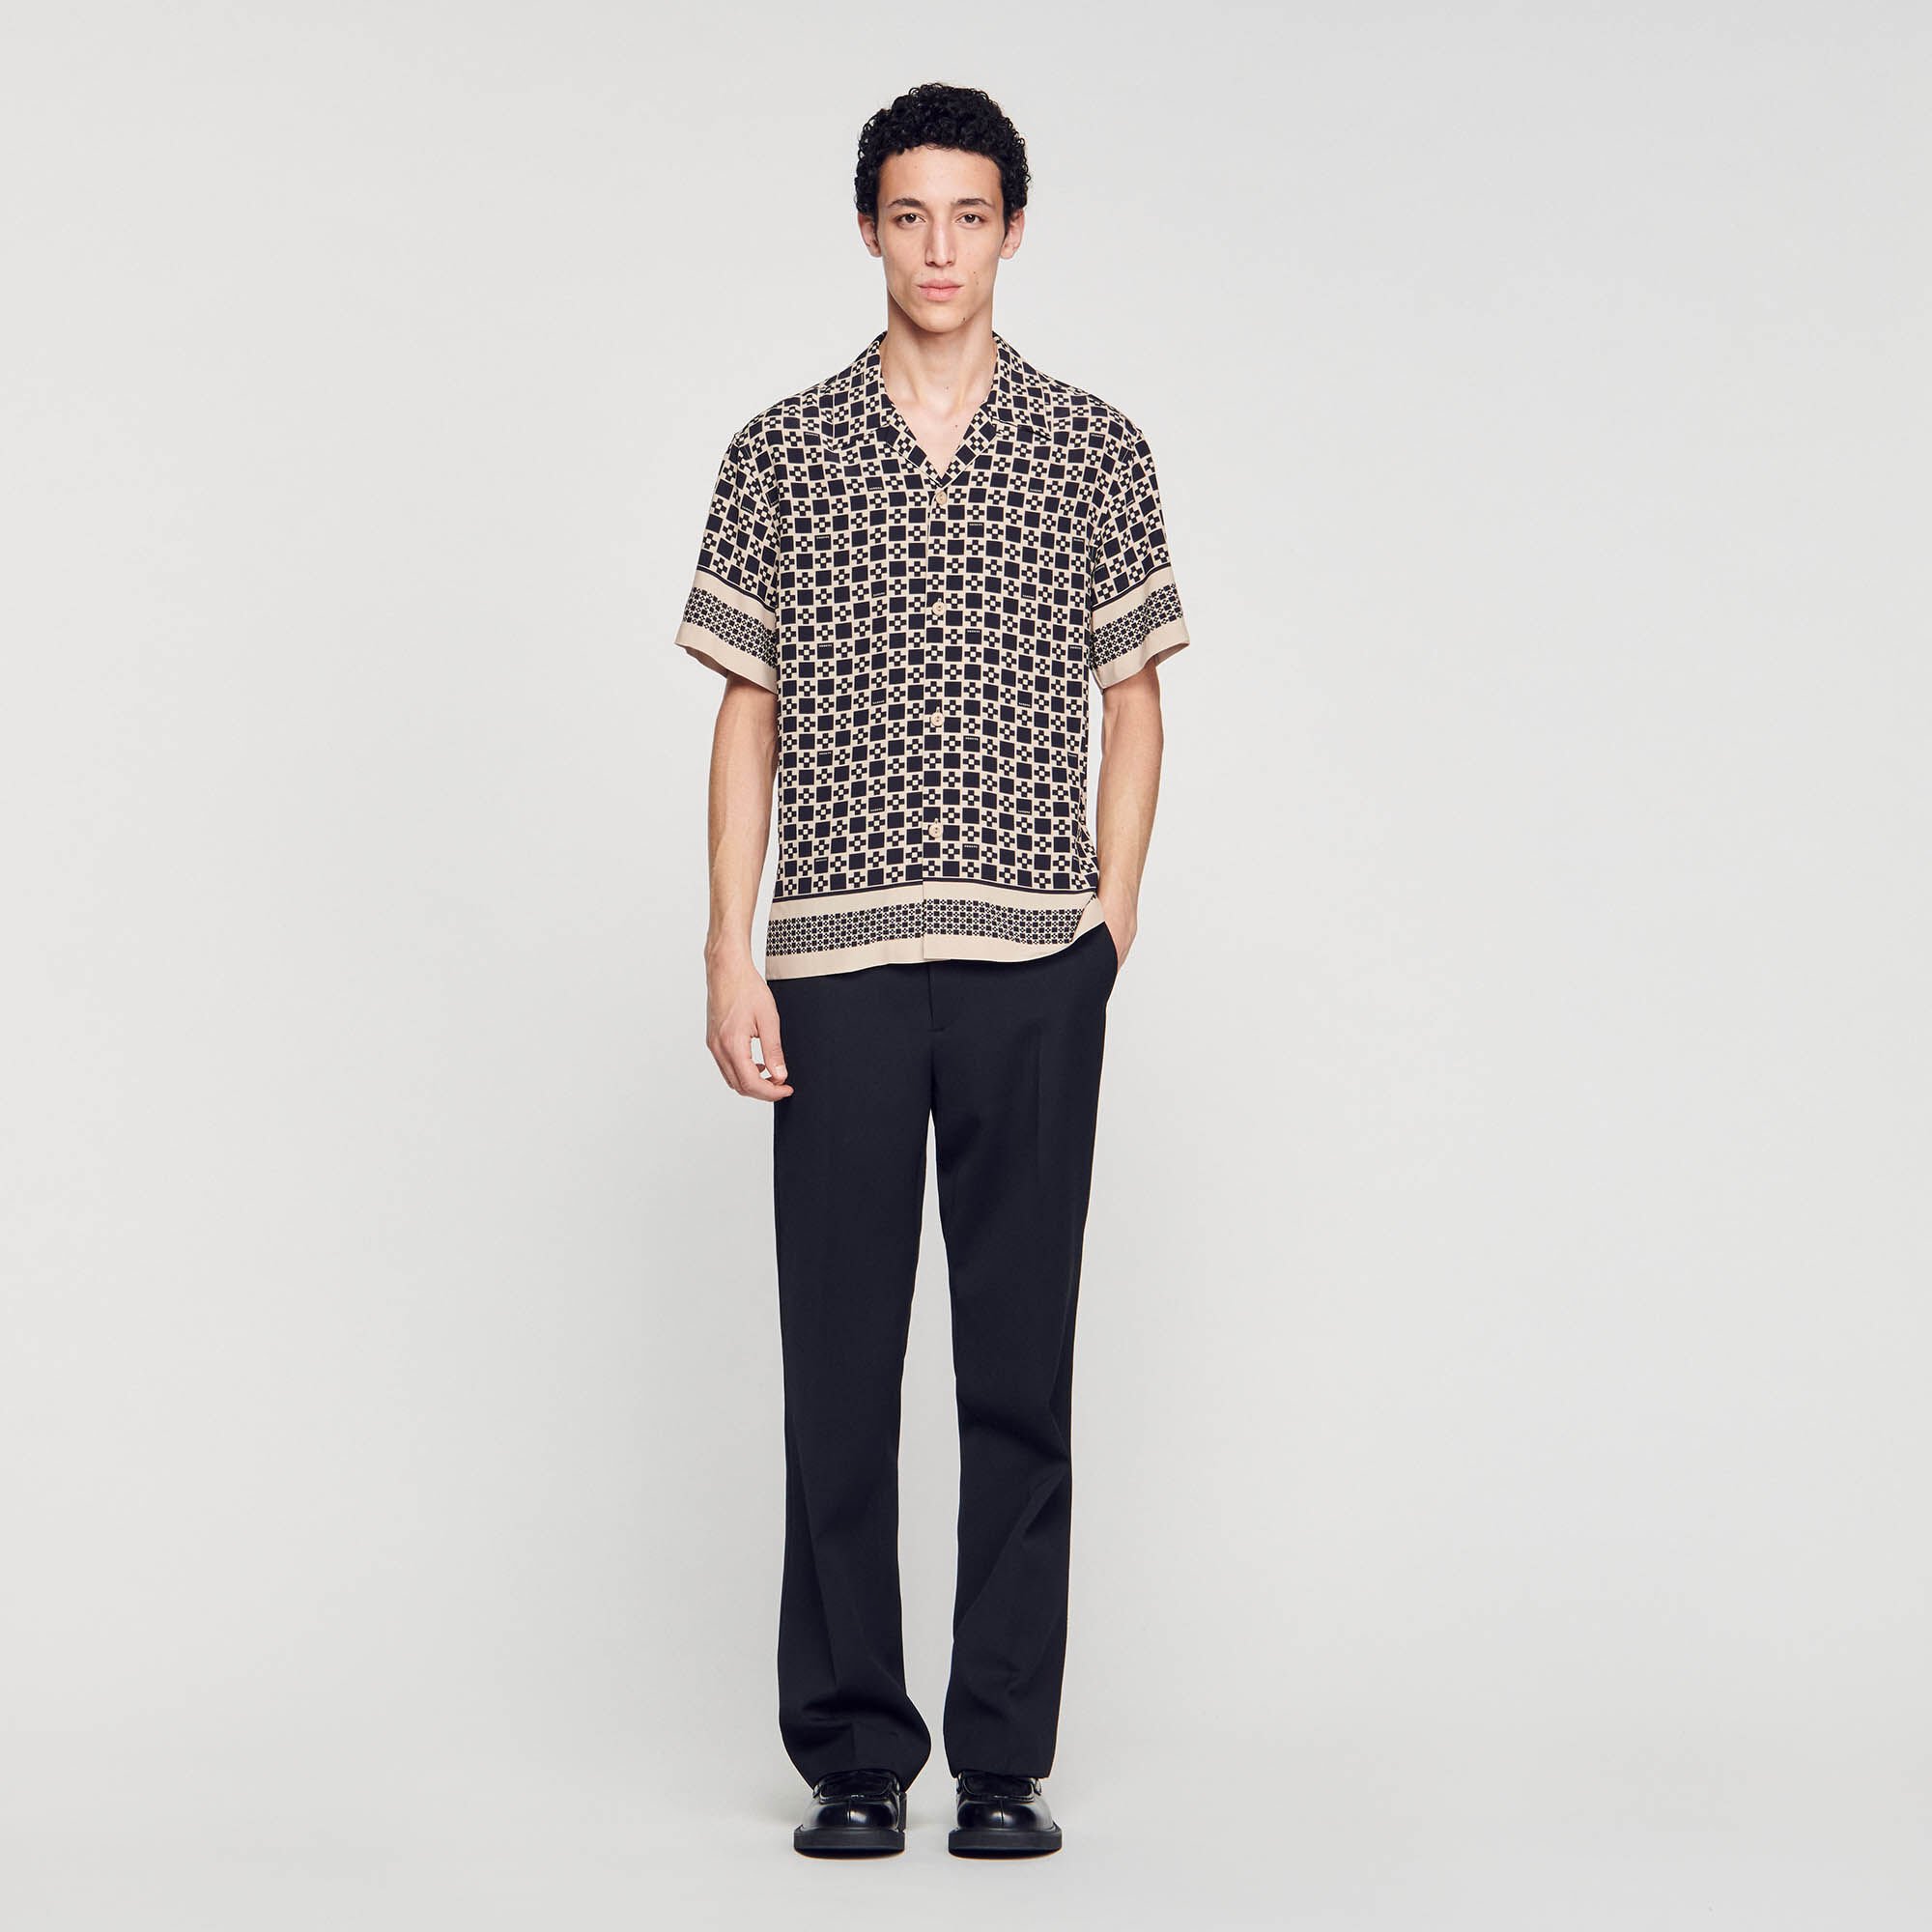 Square Cross short-sleeved shirt Black / Gray | Sandro Paris